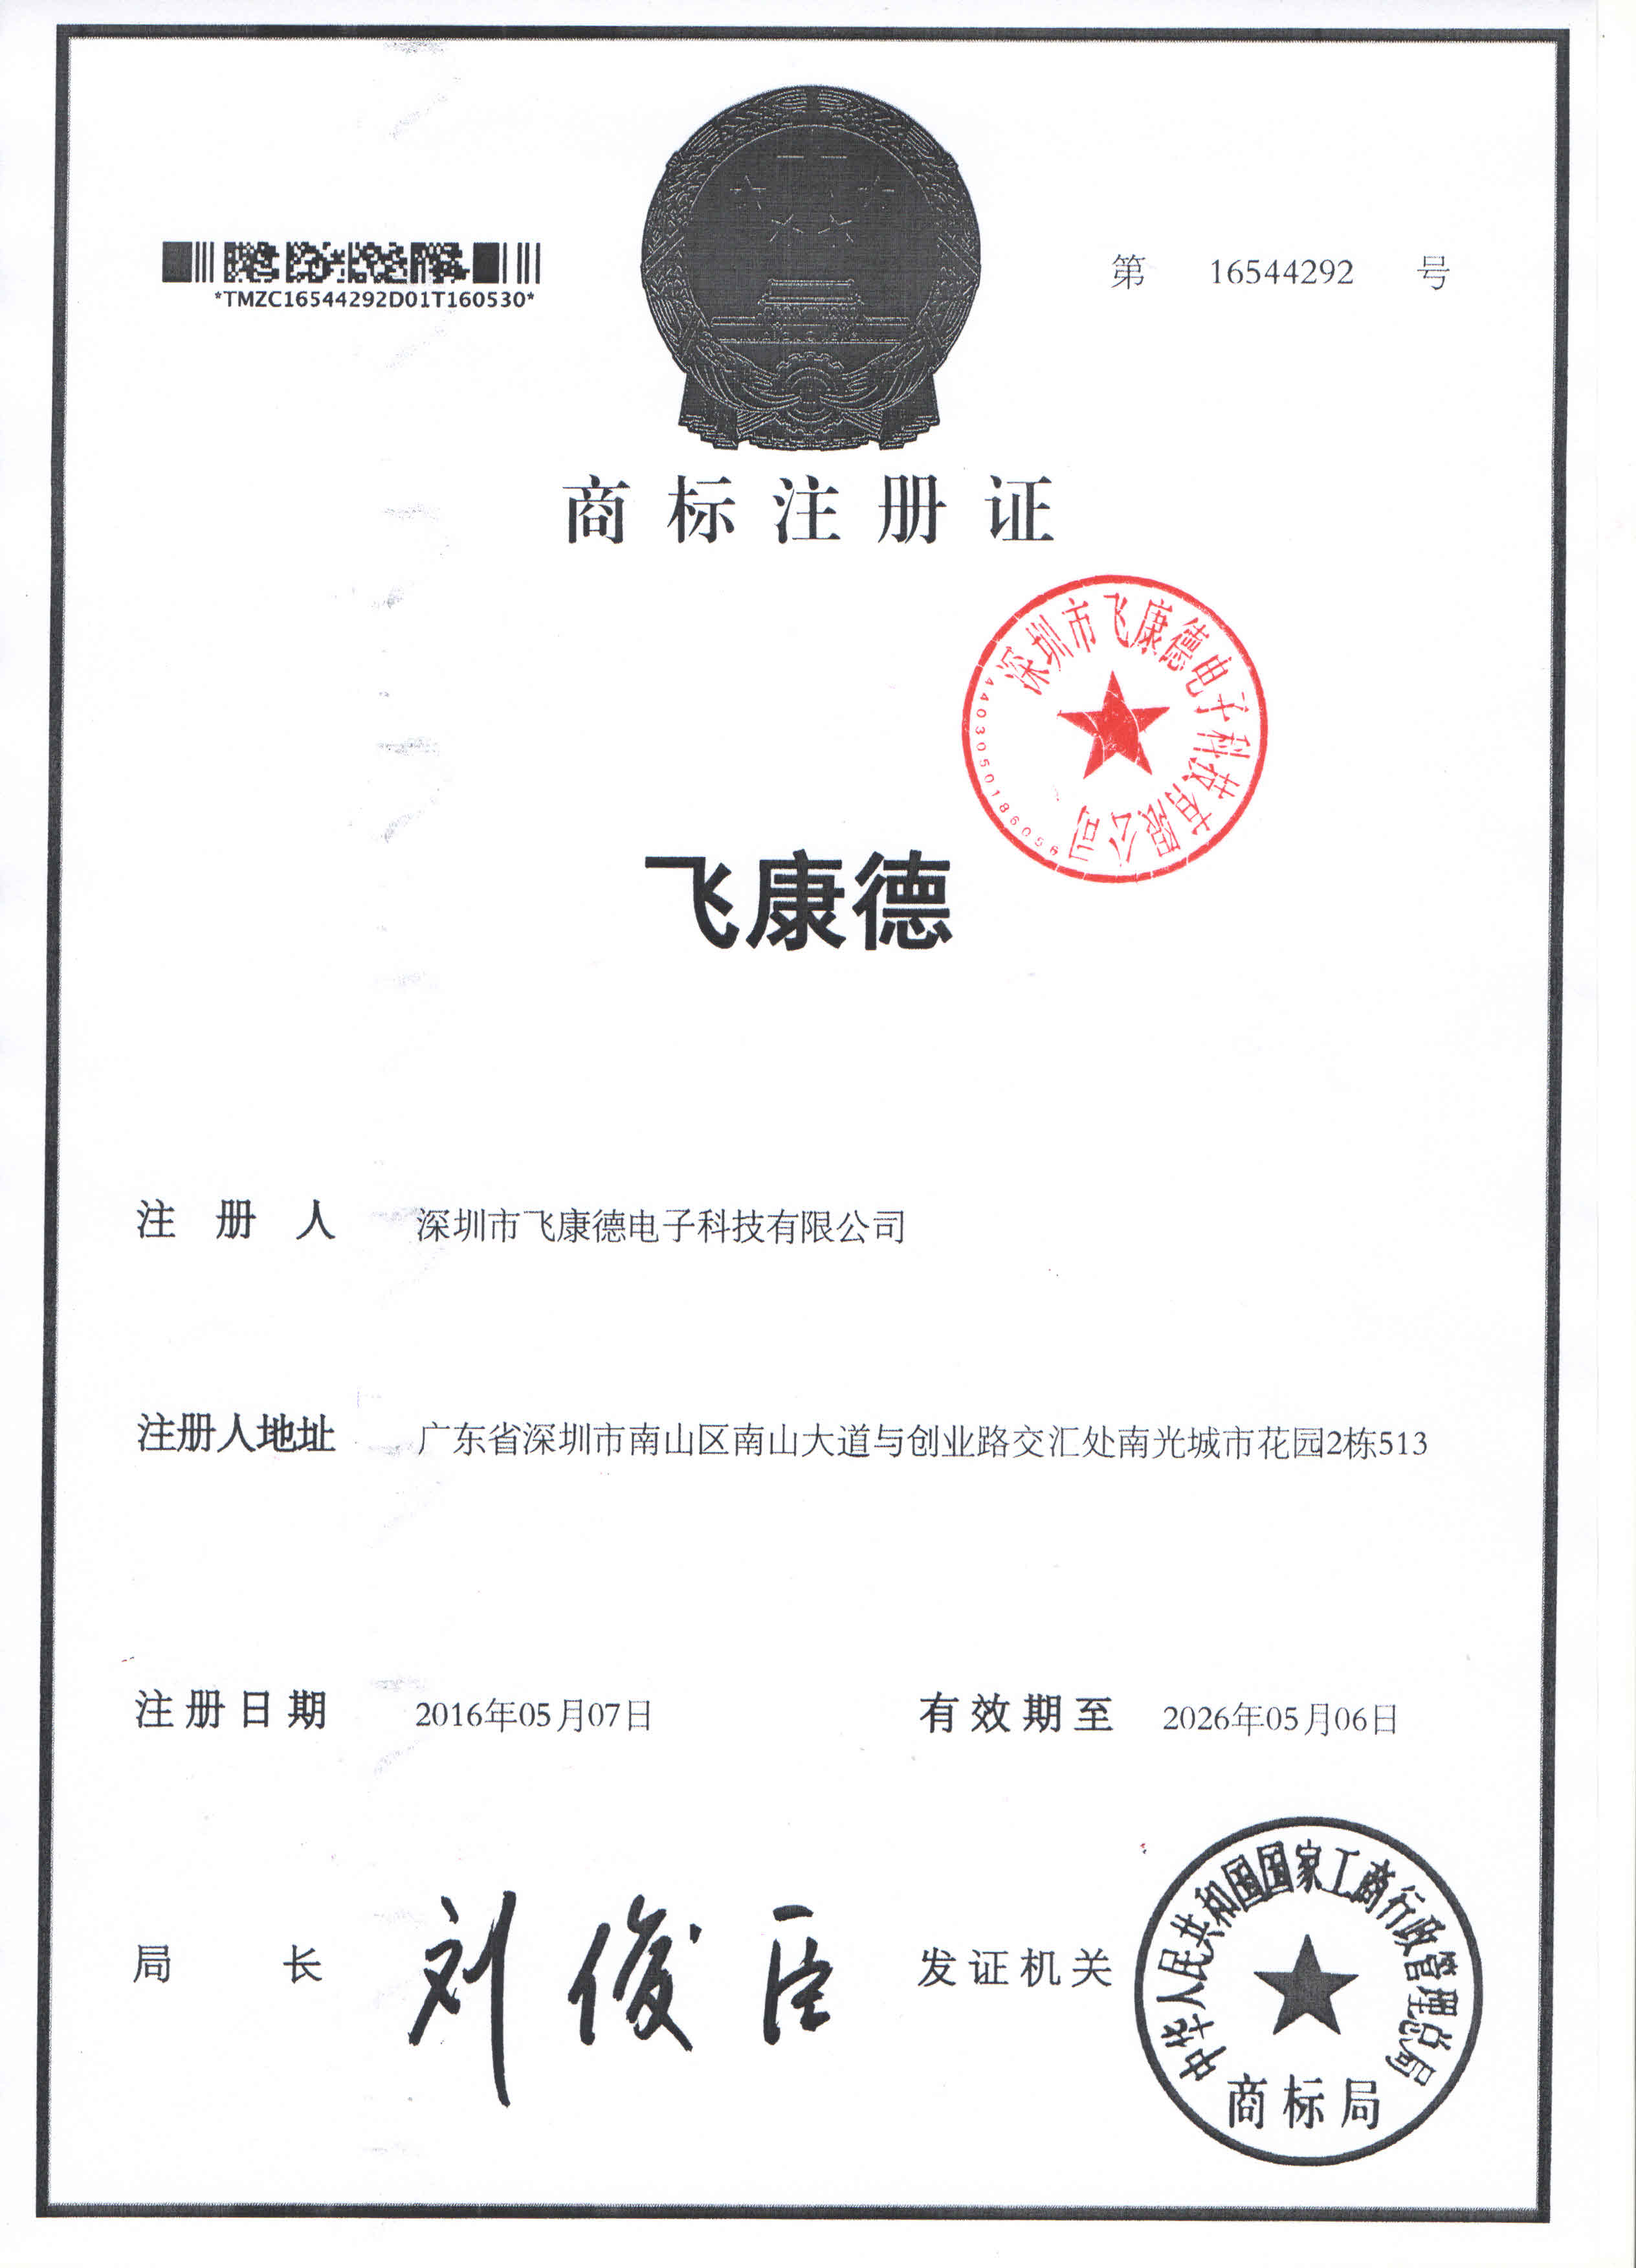 Feikant trademark registration certificate